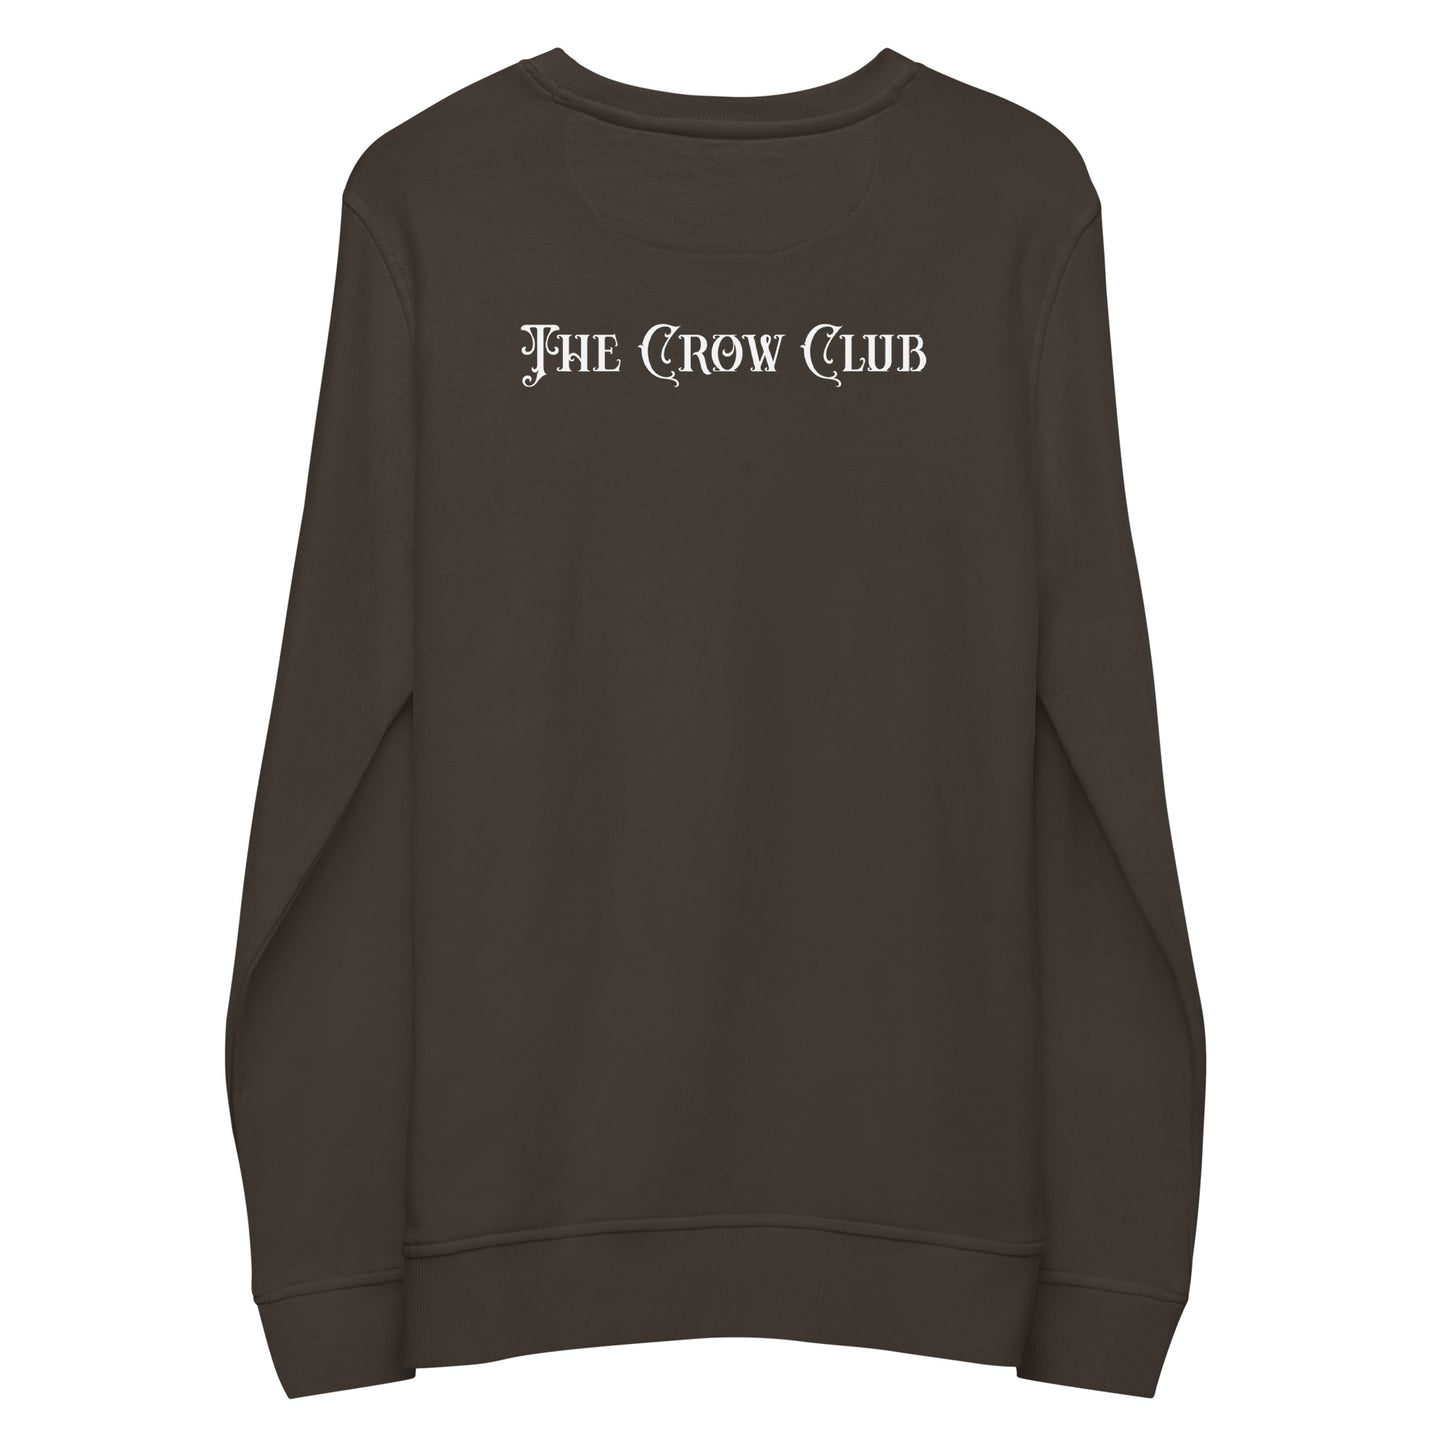 The Crow Club Unisex Organic Sweatshirt RUNS LARGE, Pictured in Navy